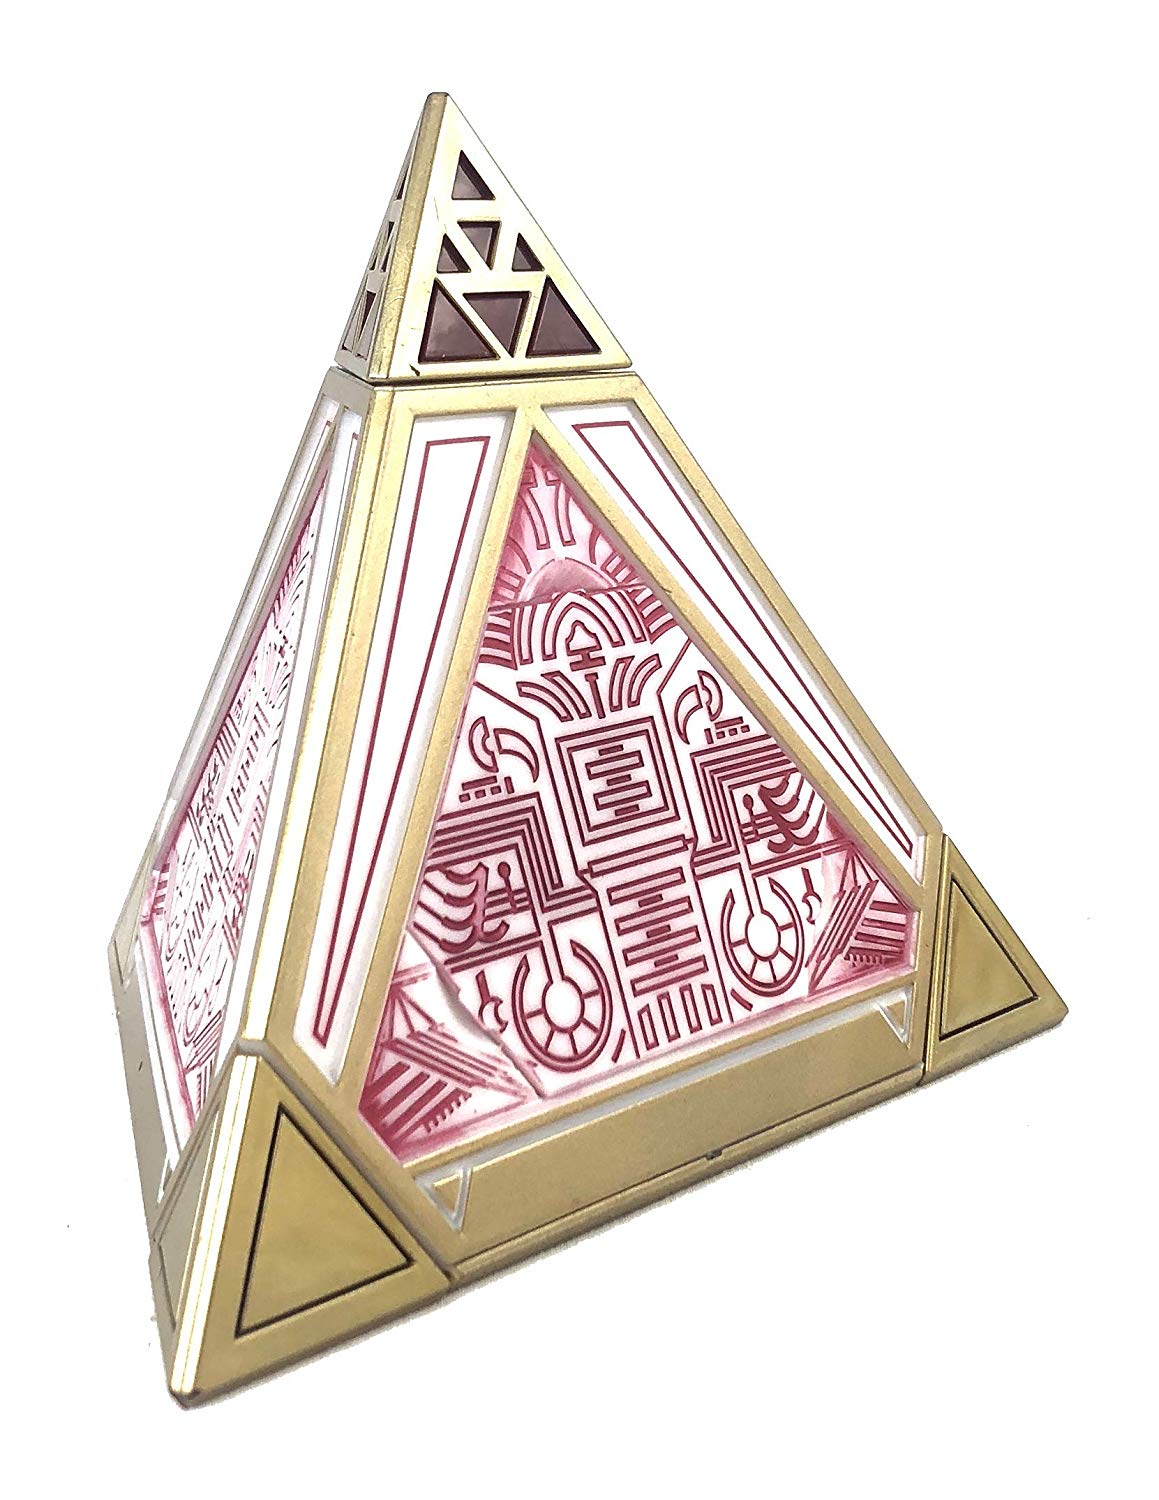 SW GE Sith Holocron Pyramid Toy 1